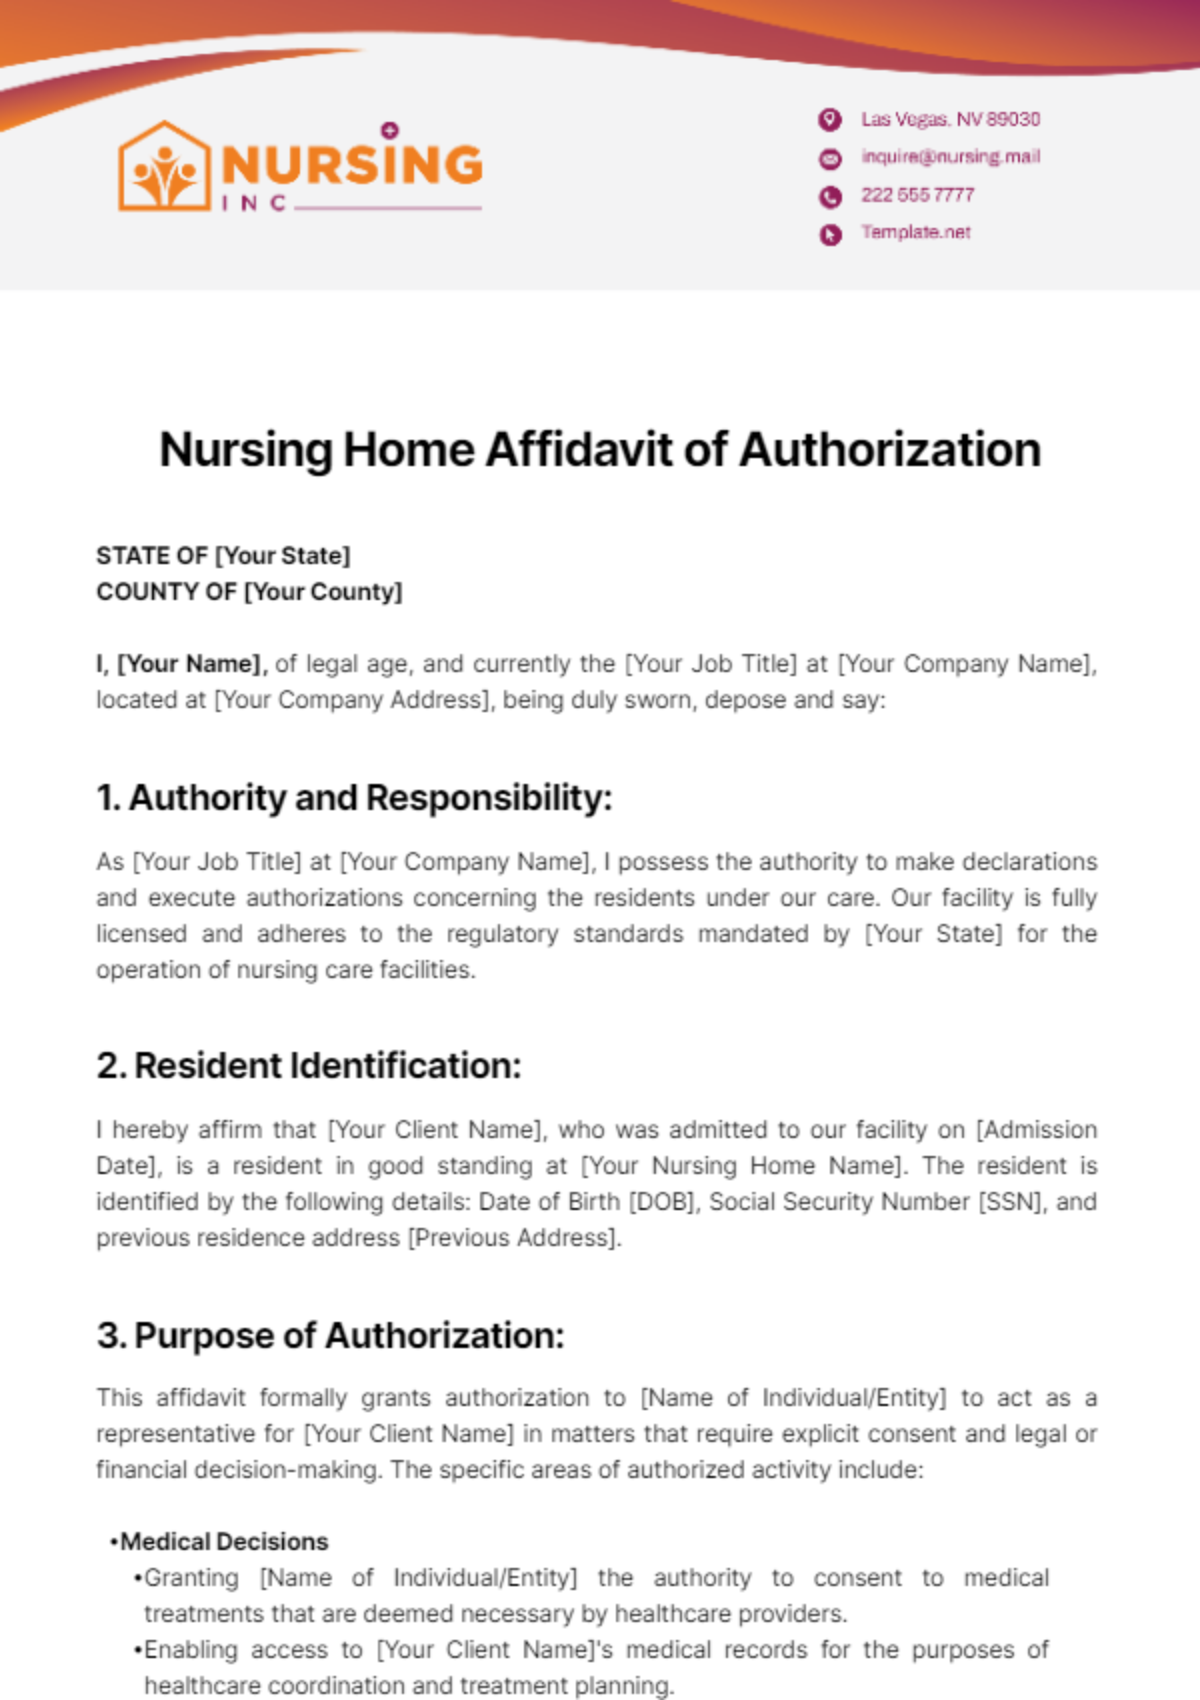 Nursing Home Affidavit of Authorization Template